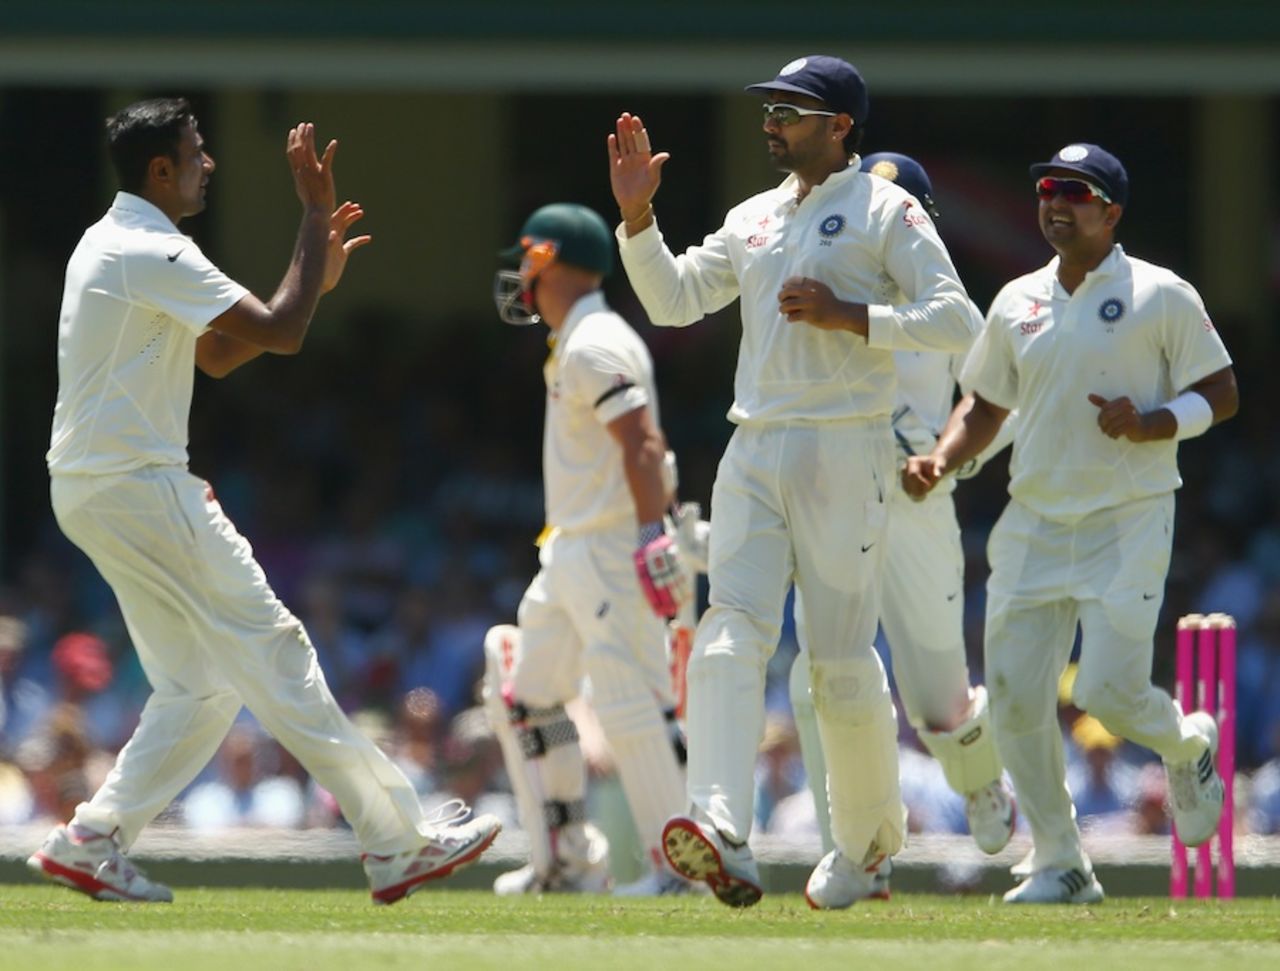 R Ashwin celebrates David Warner's wicket, Australia v India, 4th Test, Sydney, 1st day, January 6, 2015